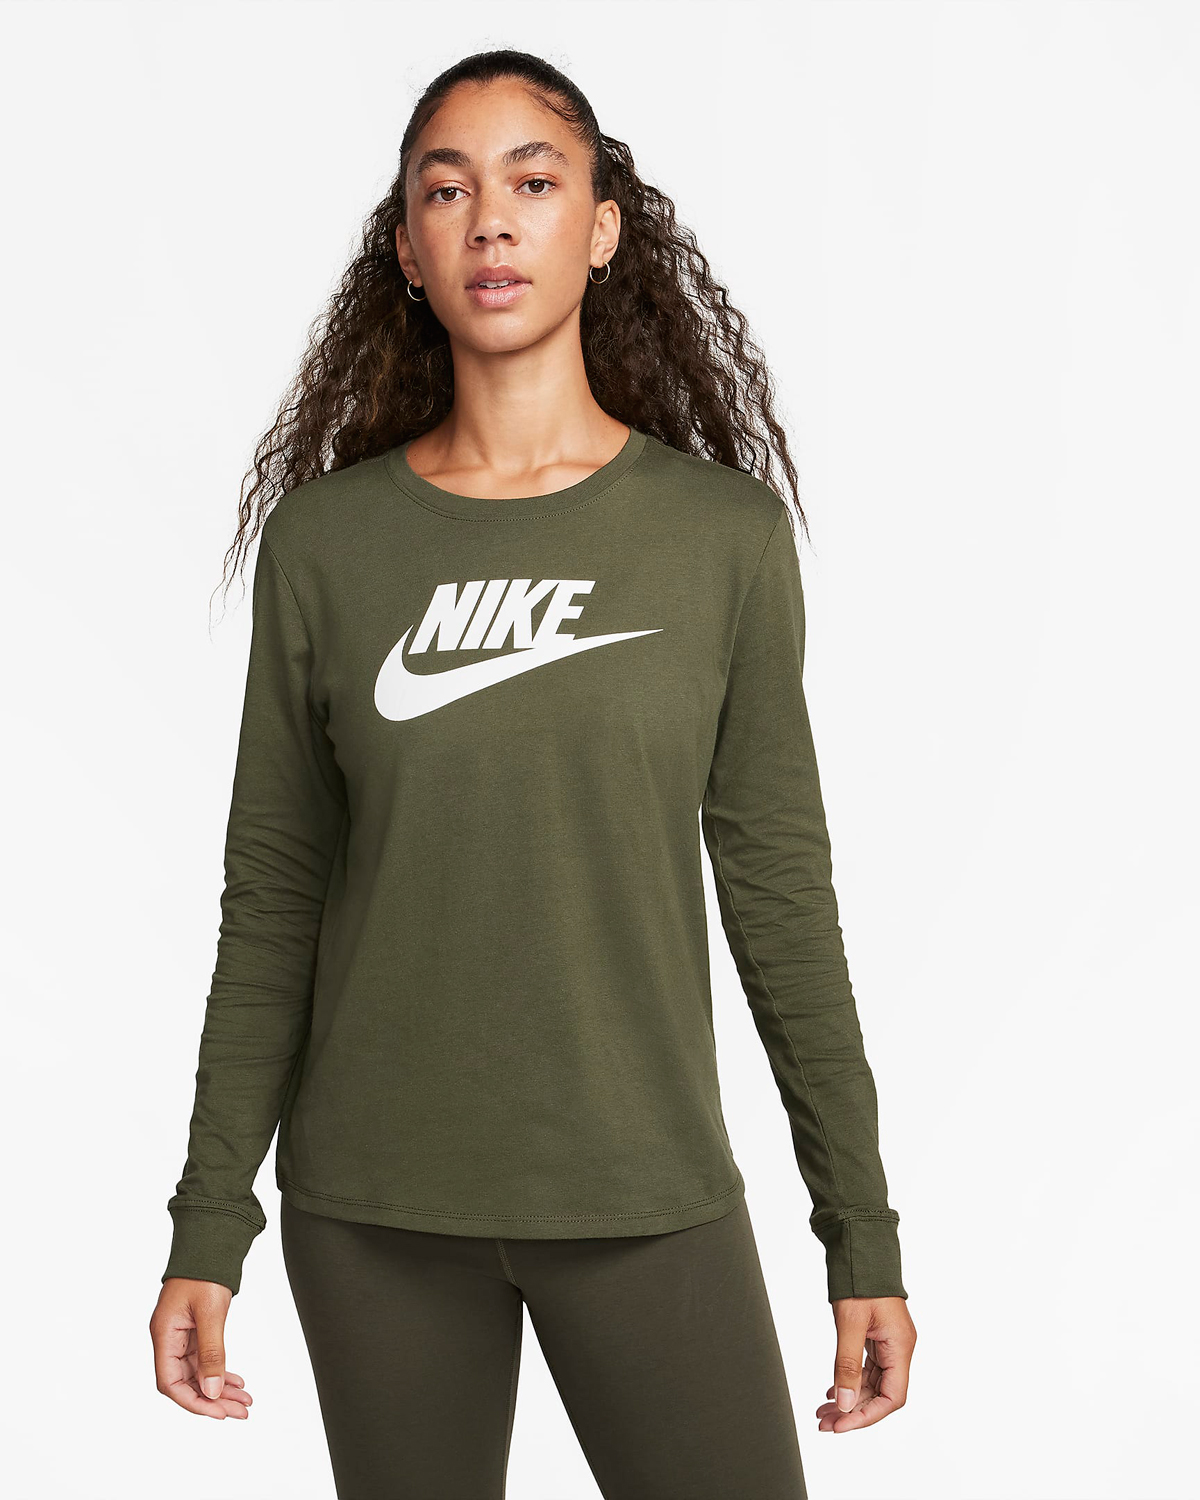 Nike-Sportswear-Womens-Long-Sleeve-T-Shirt-Olive-Cargo-Khaki